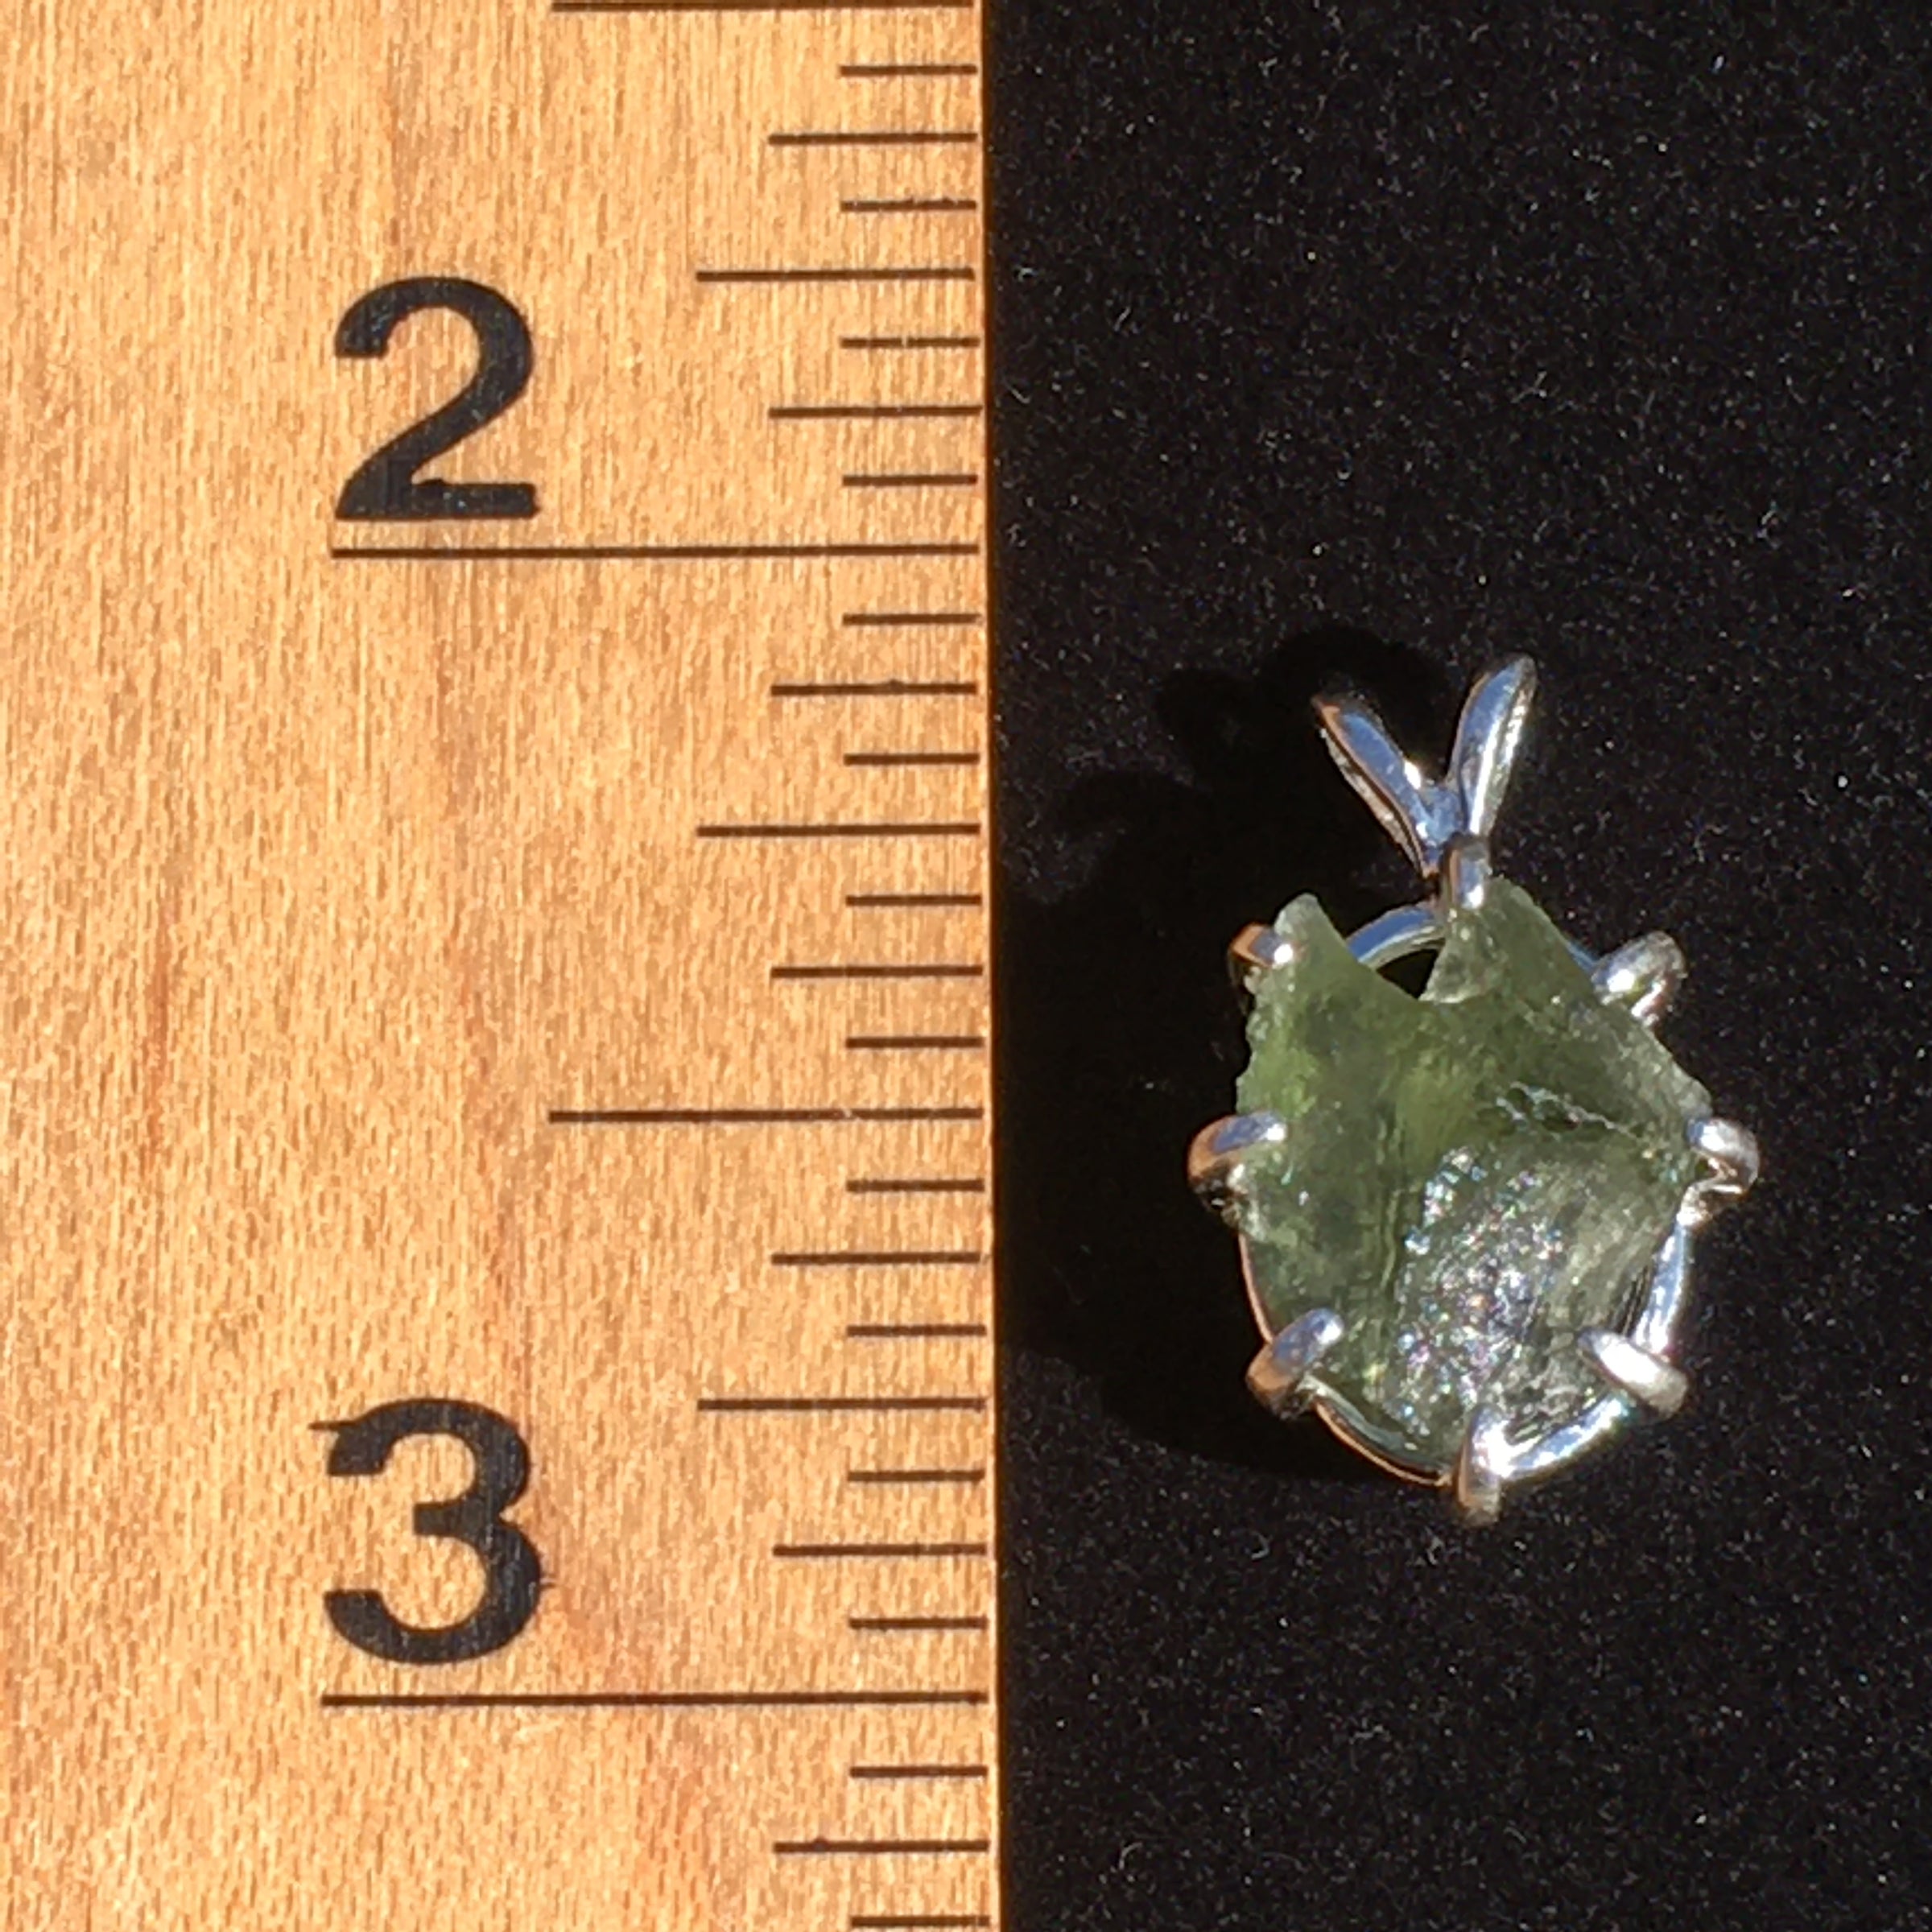 Silver Moldavite Pendant Natural Genuine 1-Moldavite Life